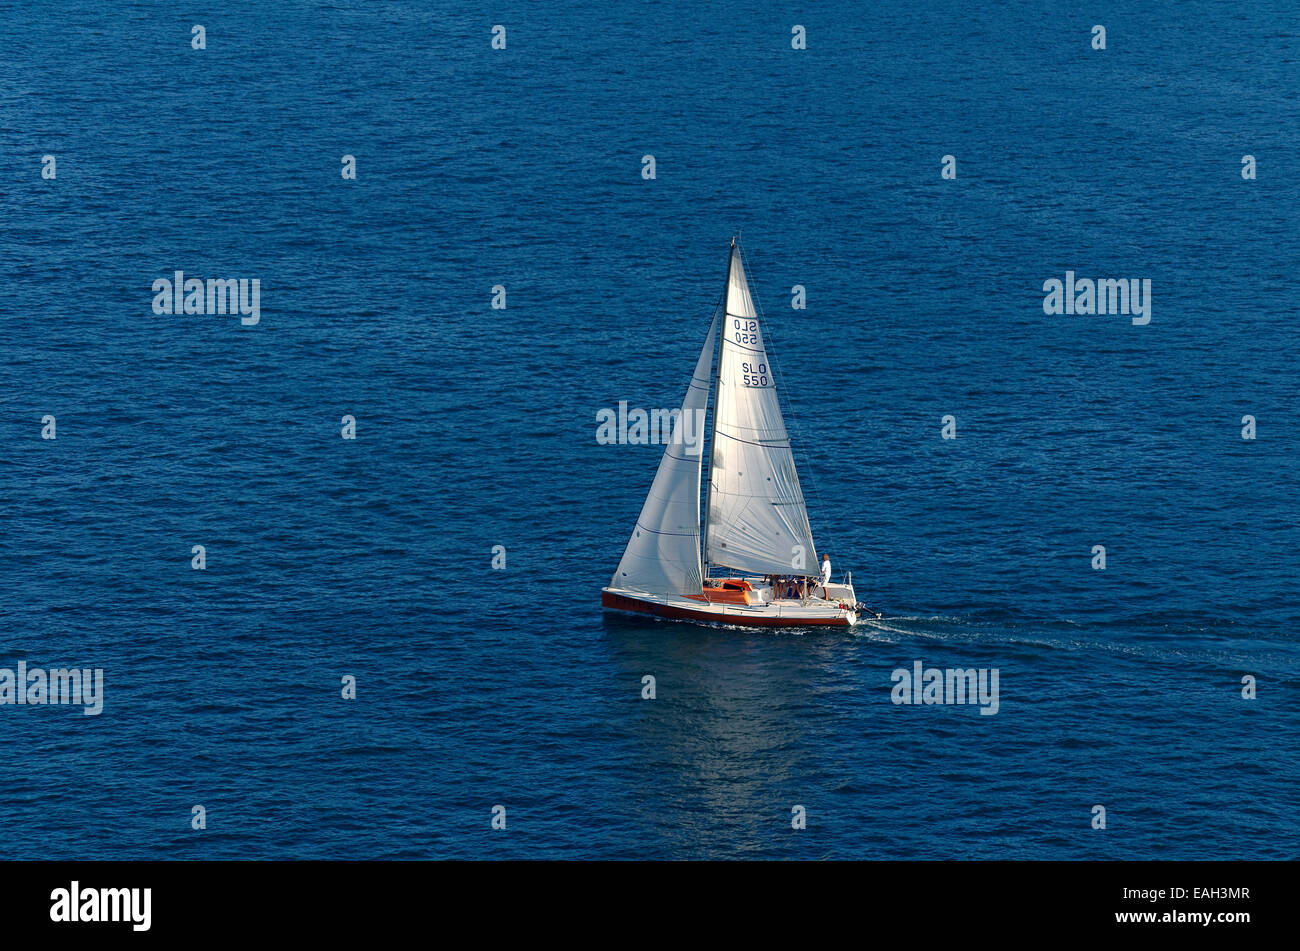 Sailing yacht cruiser/racer sailing close hauled. Stock Photo